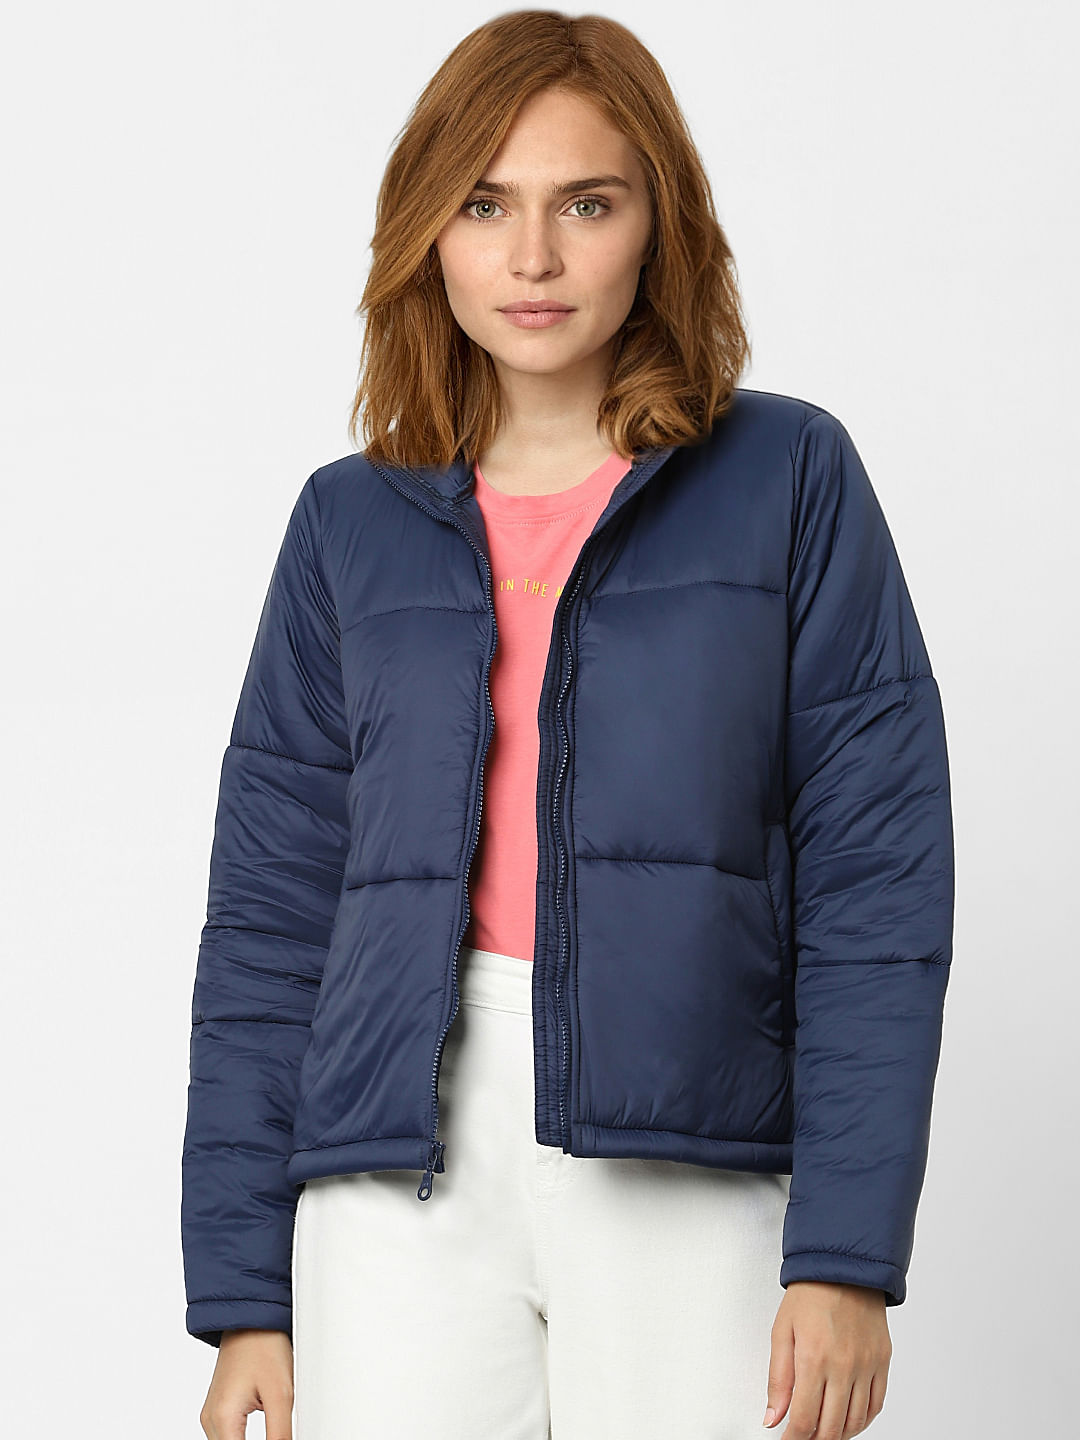 WOMEN FASHION Jackets Corduroy You and Me jacket Blue XL discount 90% 